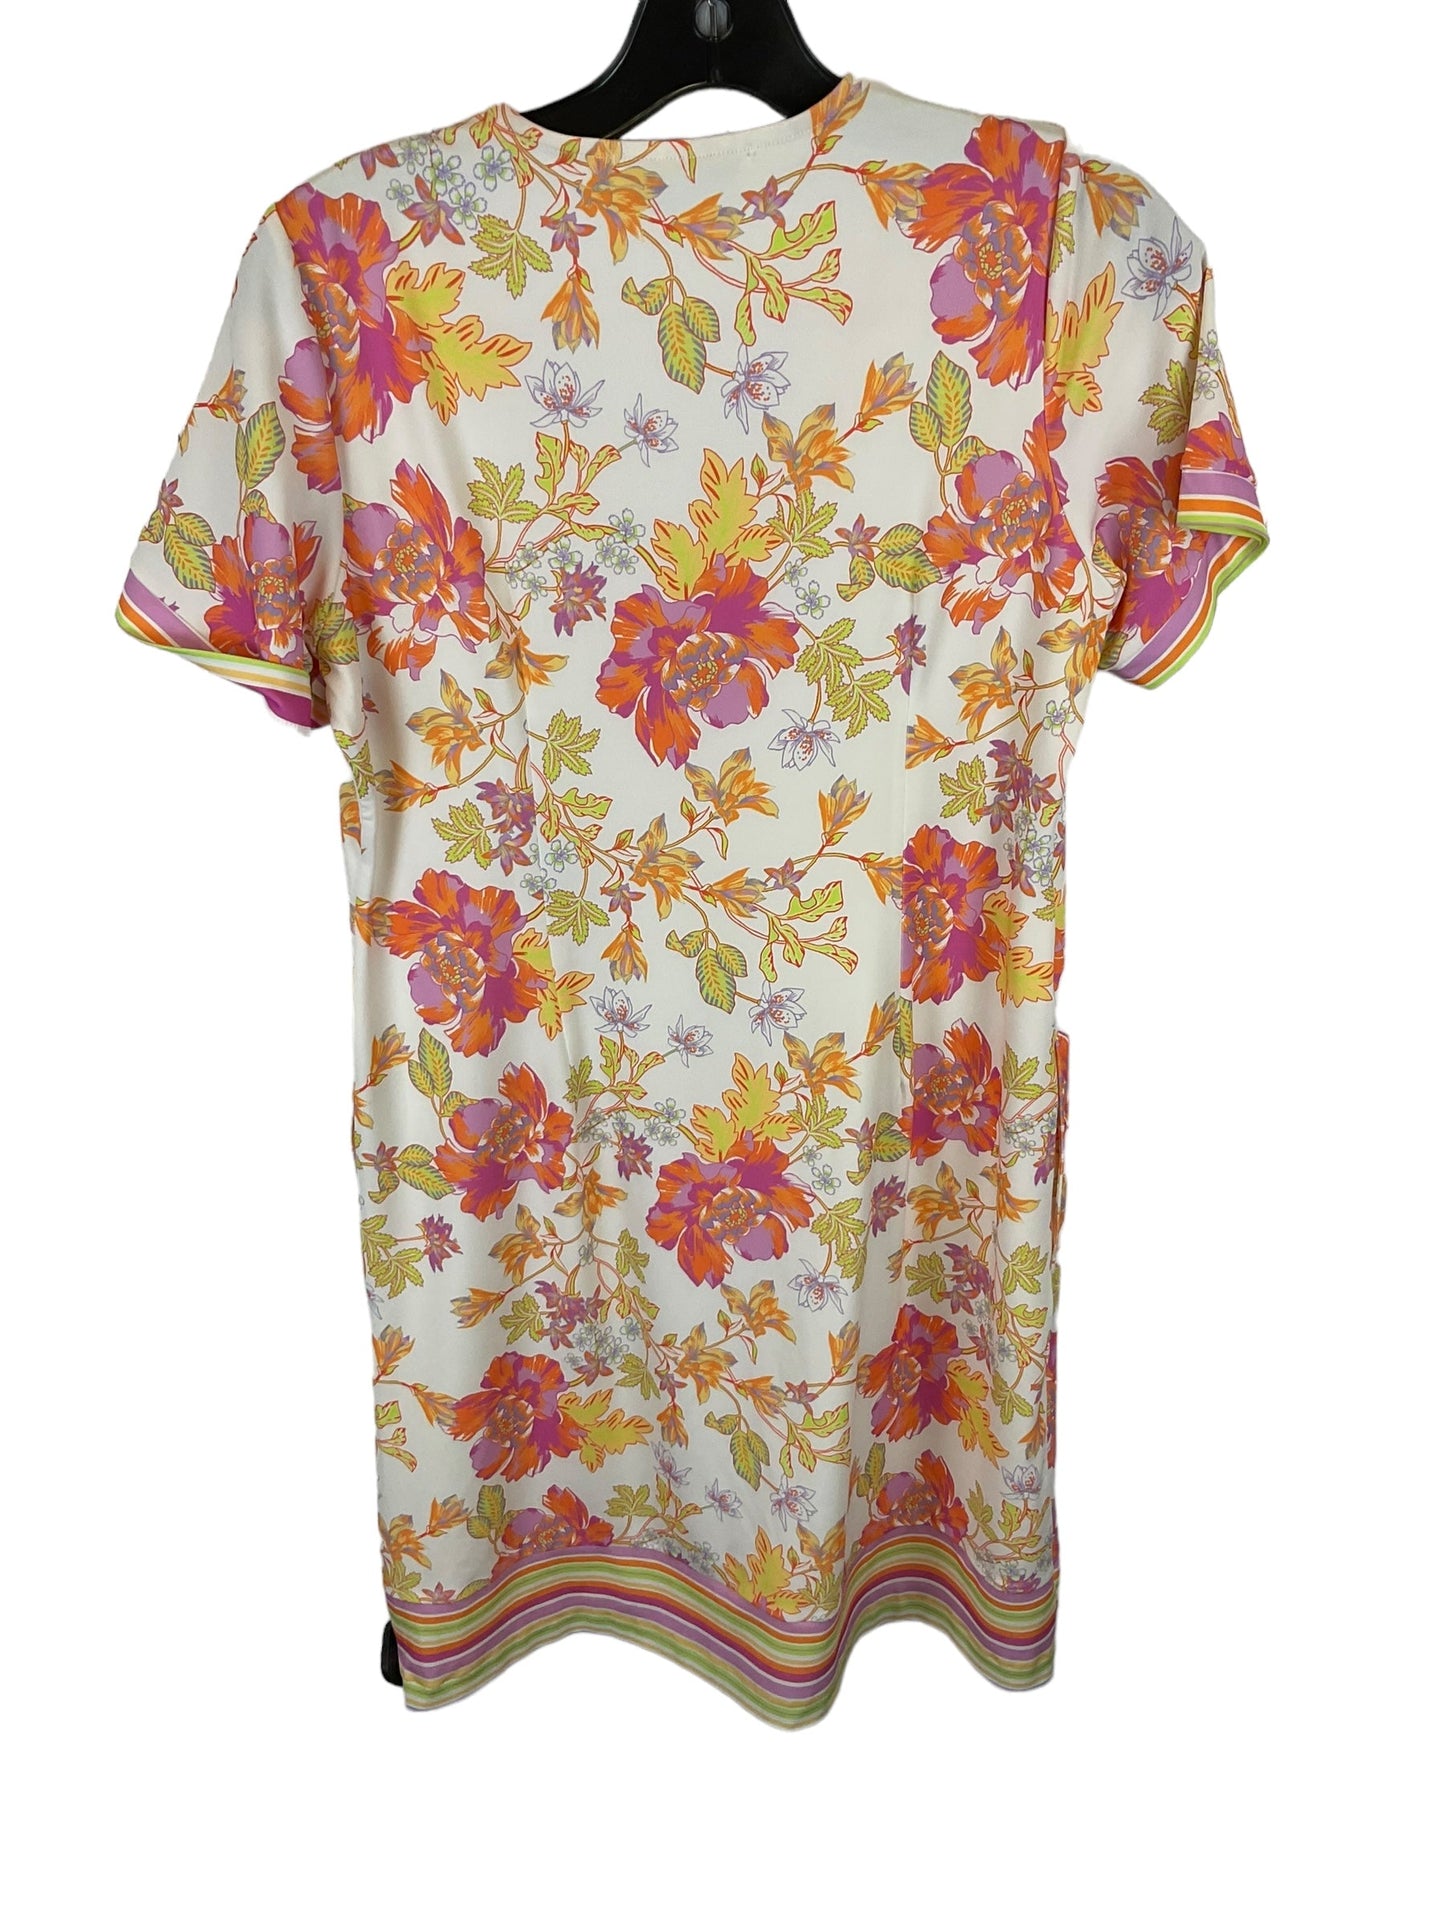 Multi-colored Dress Casual Short Hale Bob, Size S